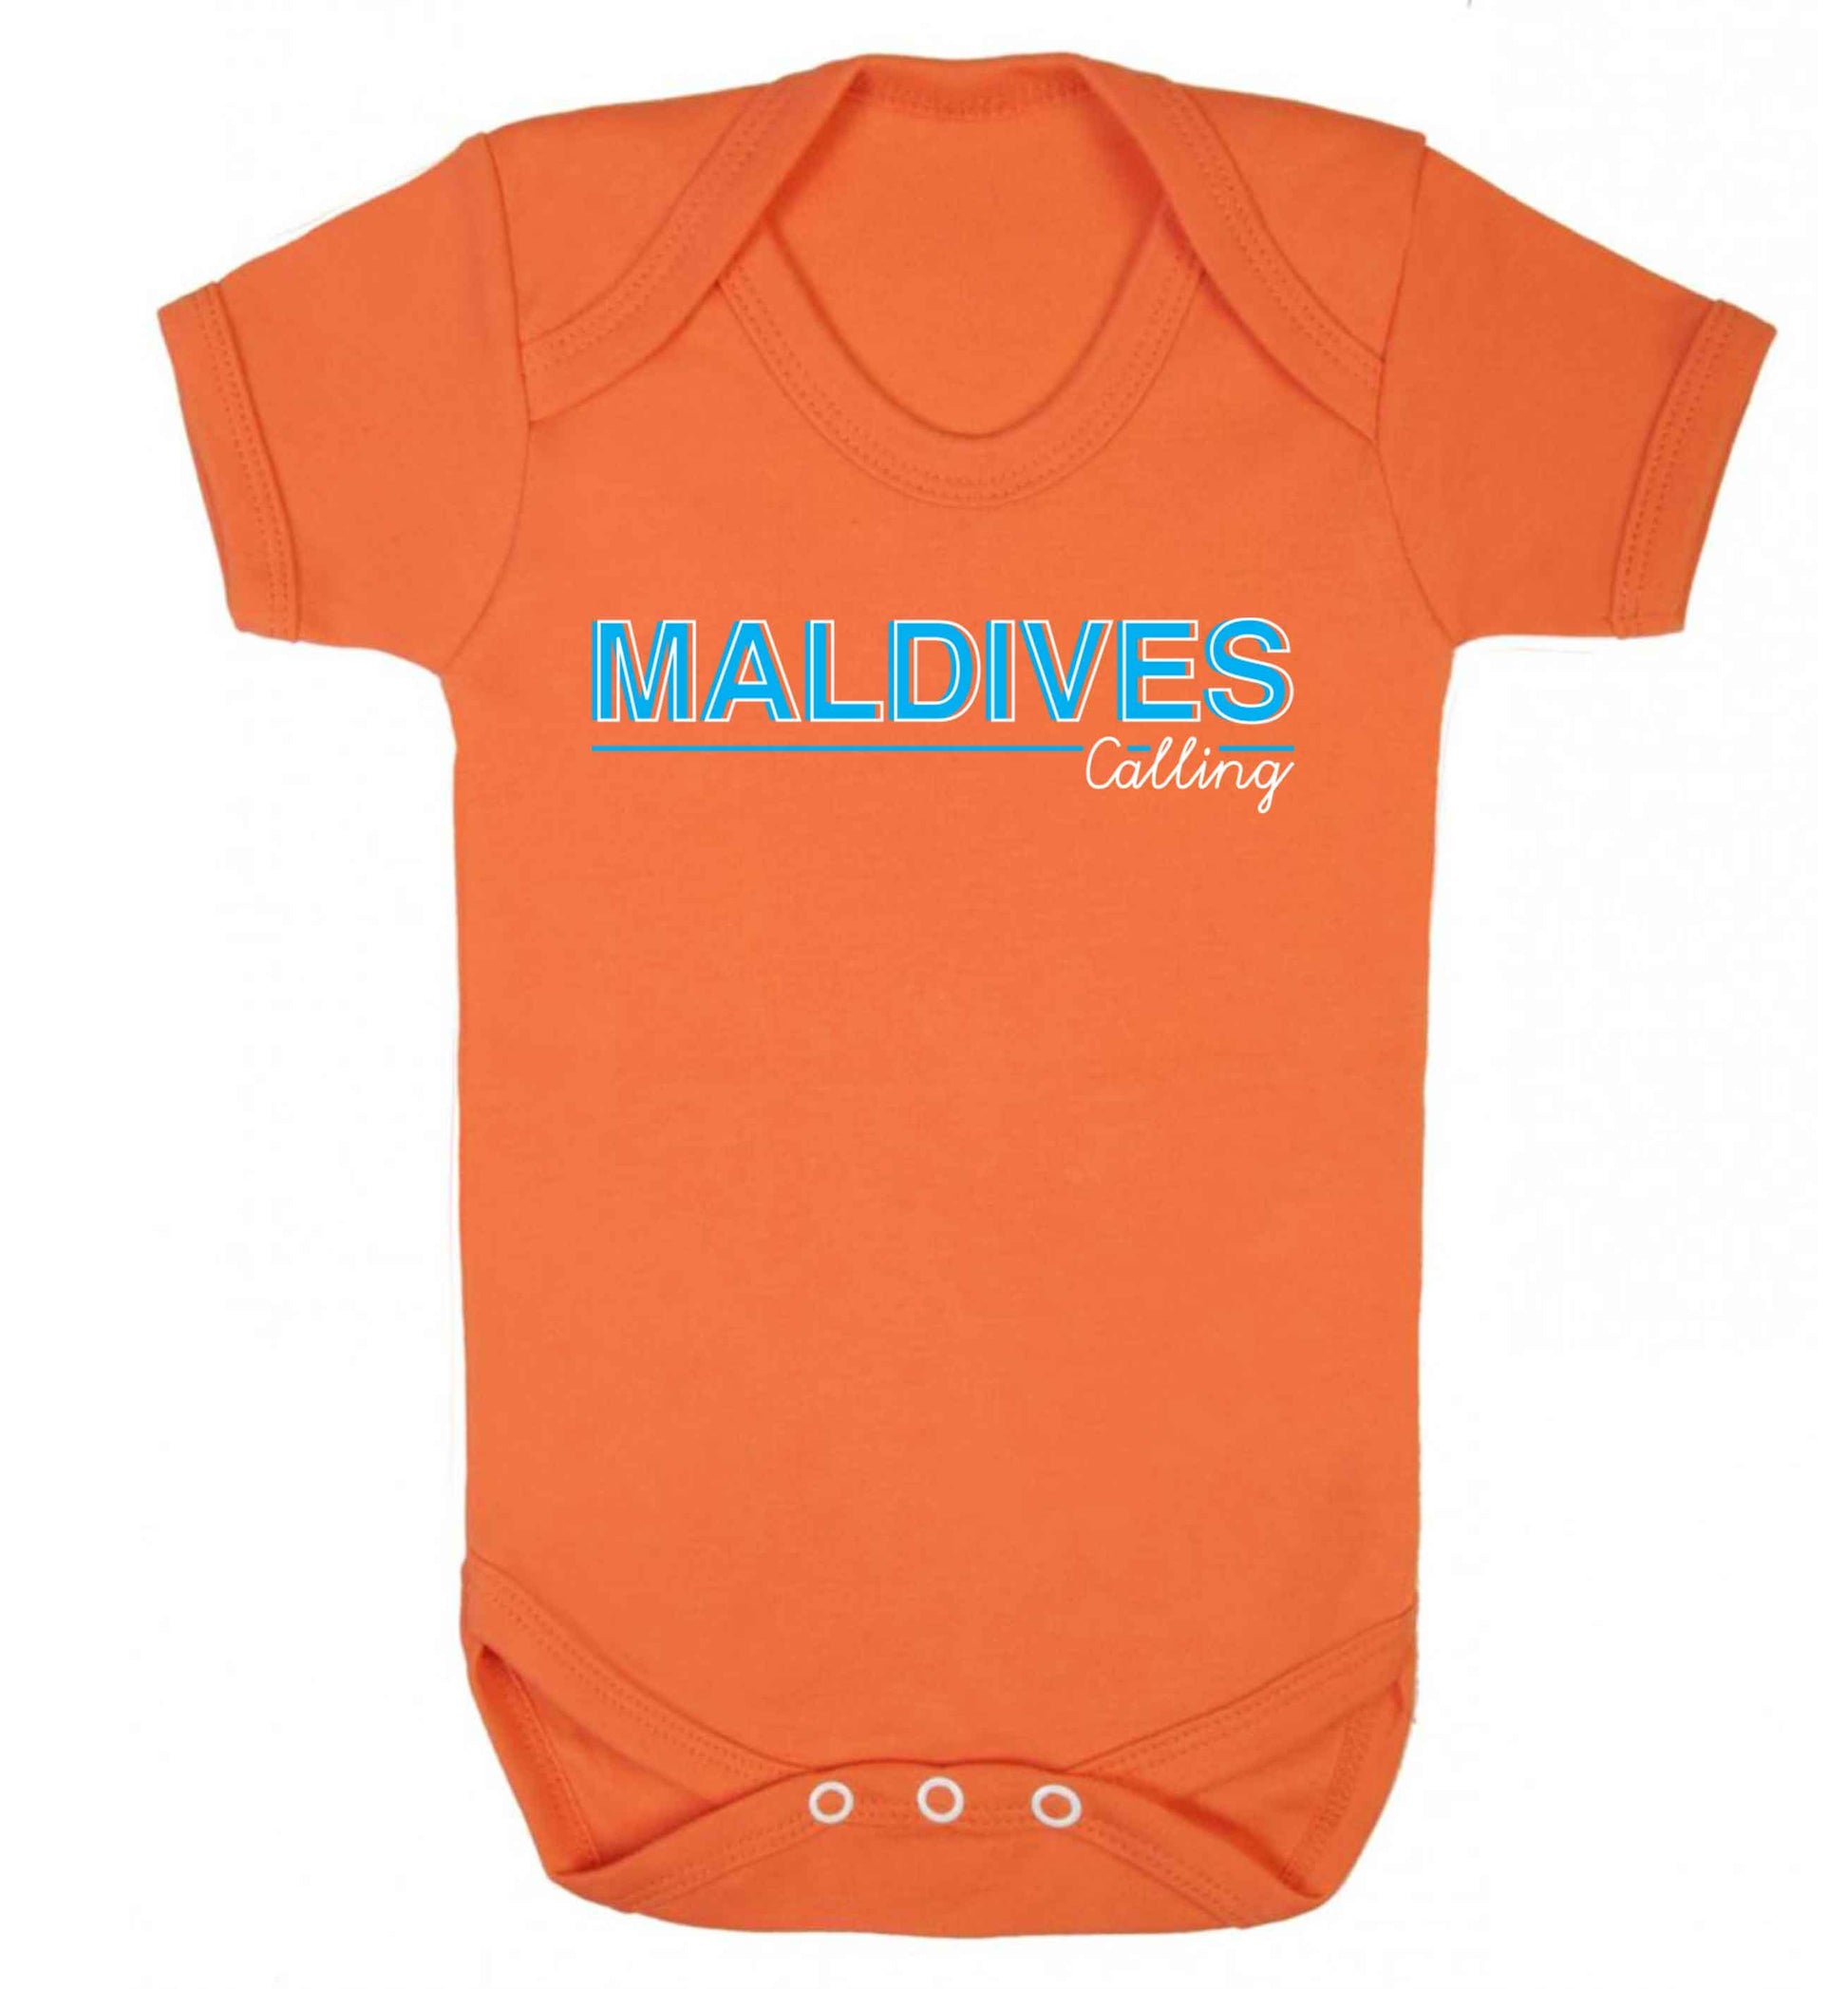 Maldives calling Baby Vest orange 18-24 months